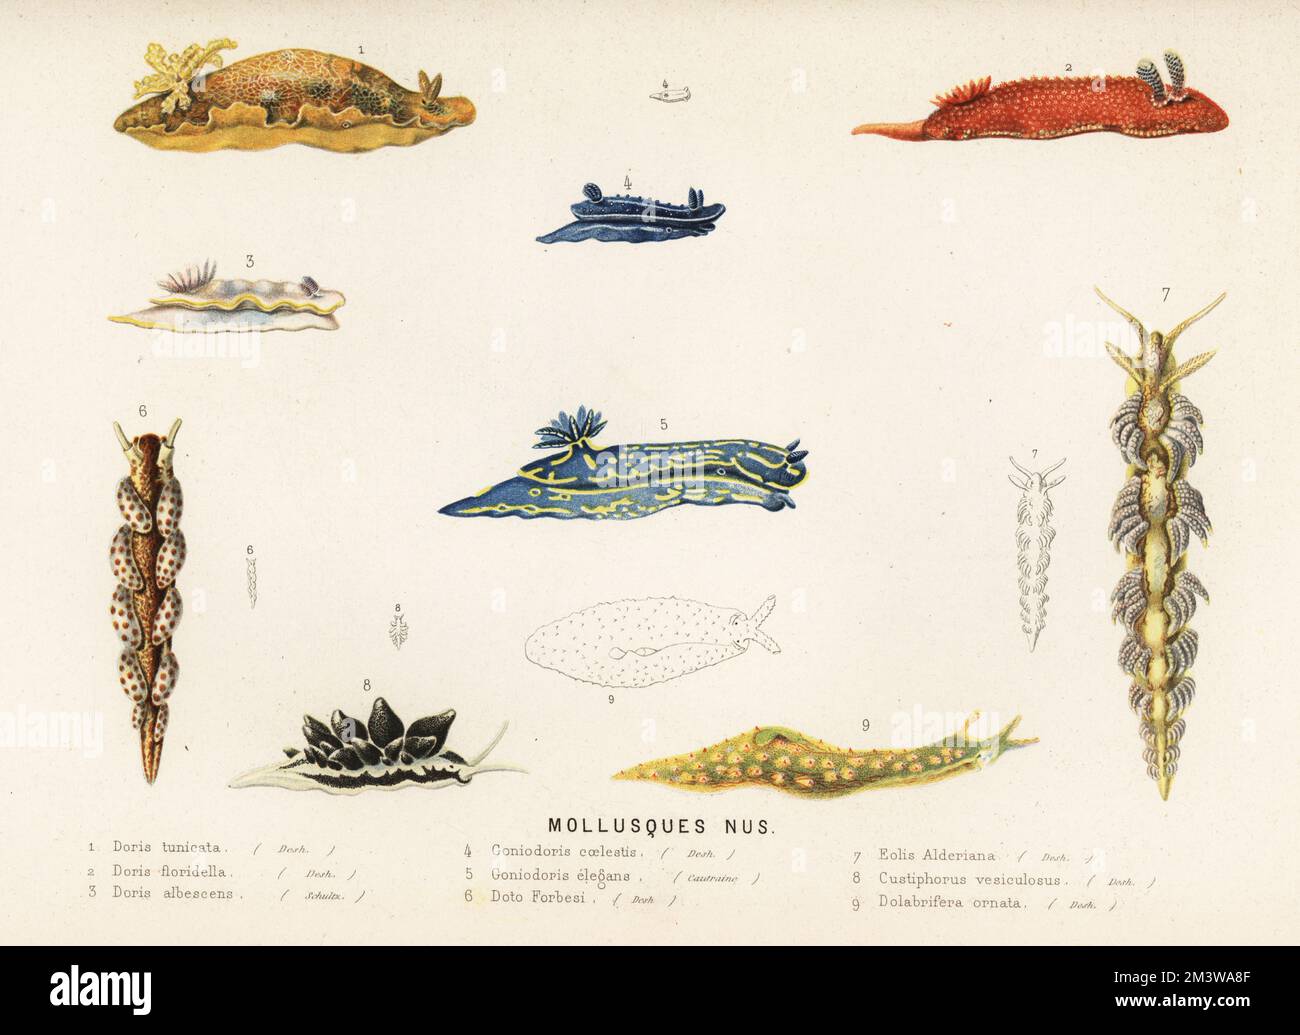 Sea slug mollusc species. Doris tunicata 1, Doris floridella 2, Felimida purpurea 3, Felimare orsinii 4, Felimare picta 5, Doto coronata 6, Spurilla neapolitana 7, Calliopaea bellula 8, and Dolabrifera ornata 9. Molluscs nus. Chromolithograph from Alfred Fredol’s Le Monde de la Mer, the World of the Sea, edited by Olivier Fredol, Librairie Hachette et. Cie., Paris, 1881. Alfred Fredol was the pseudonym of French zoologist and botanist Alfred Moquin-Tandon, 1804-1863. Stock Photo